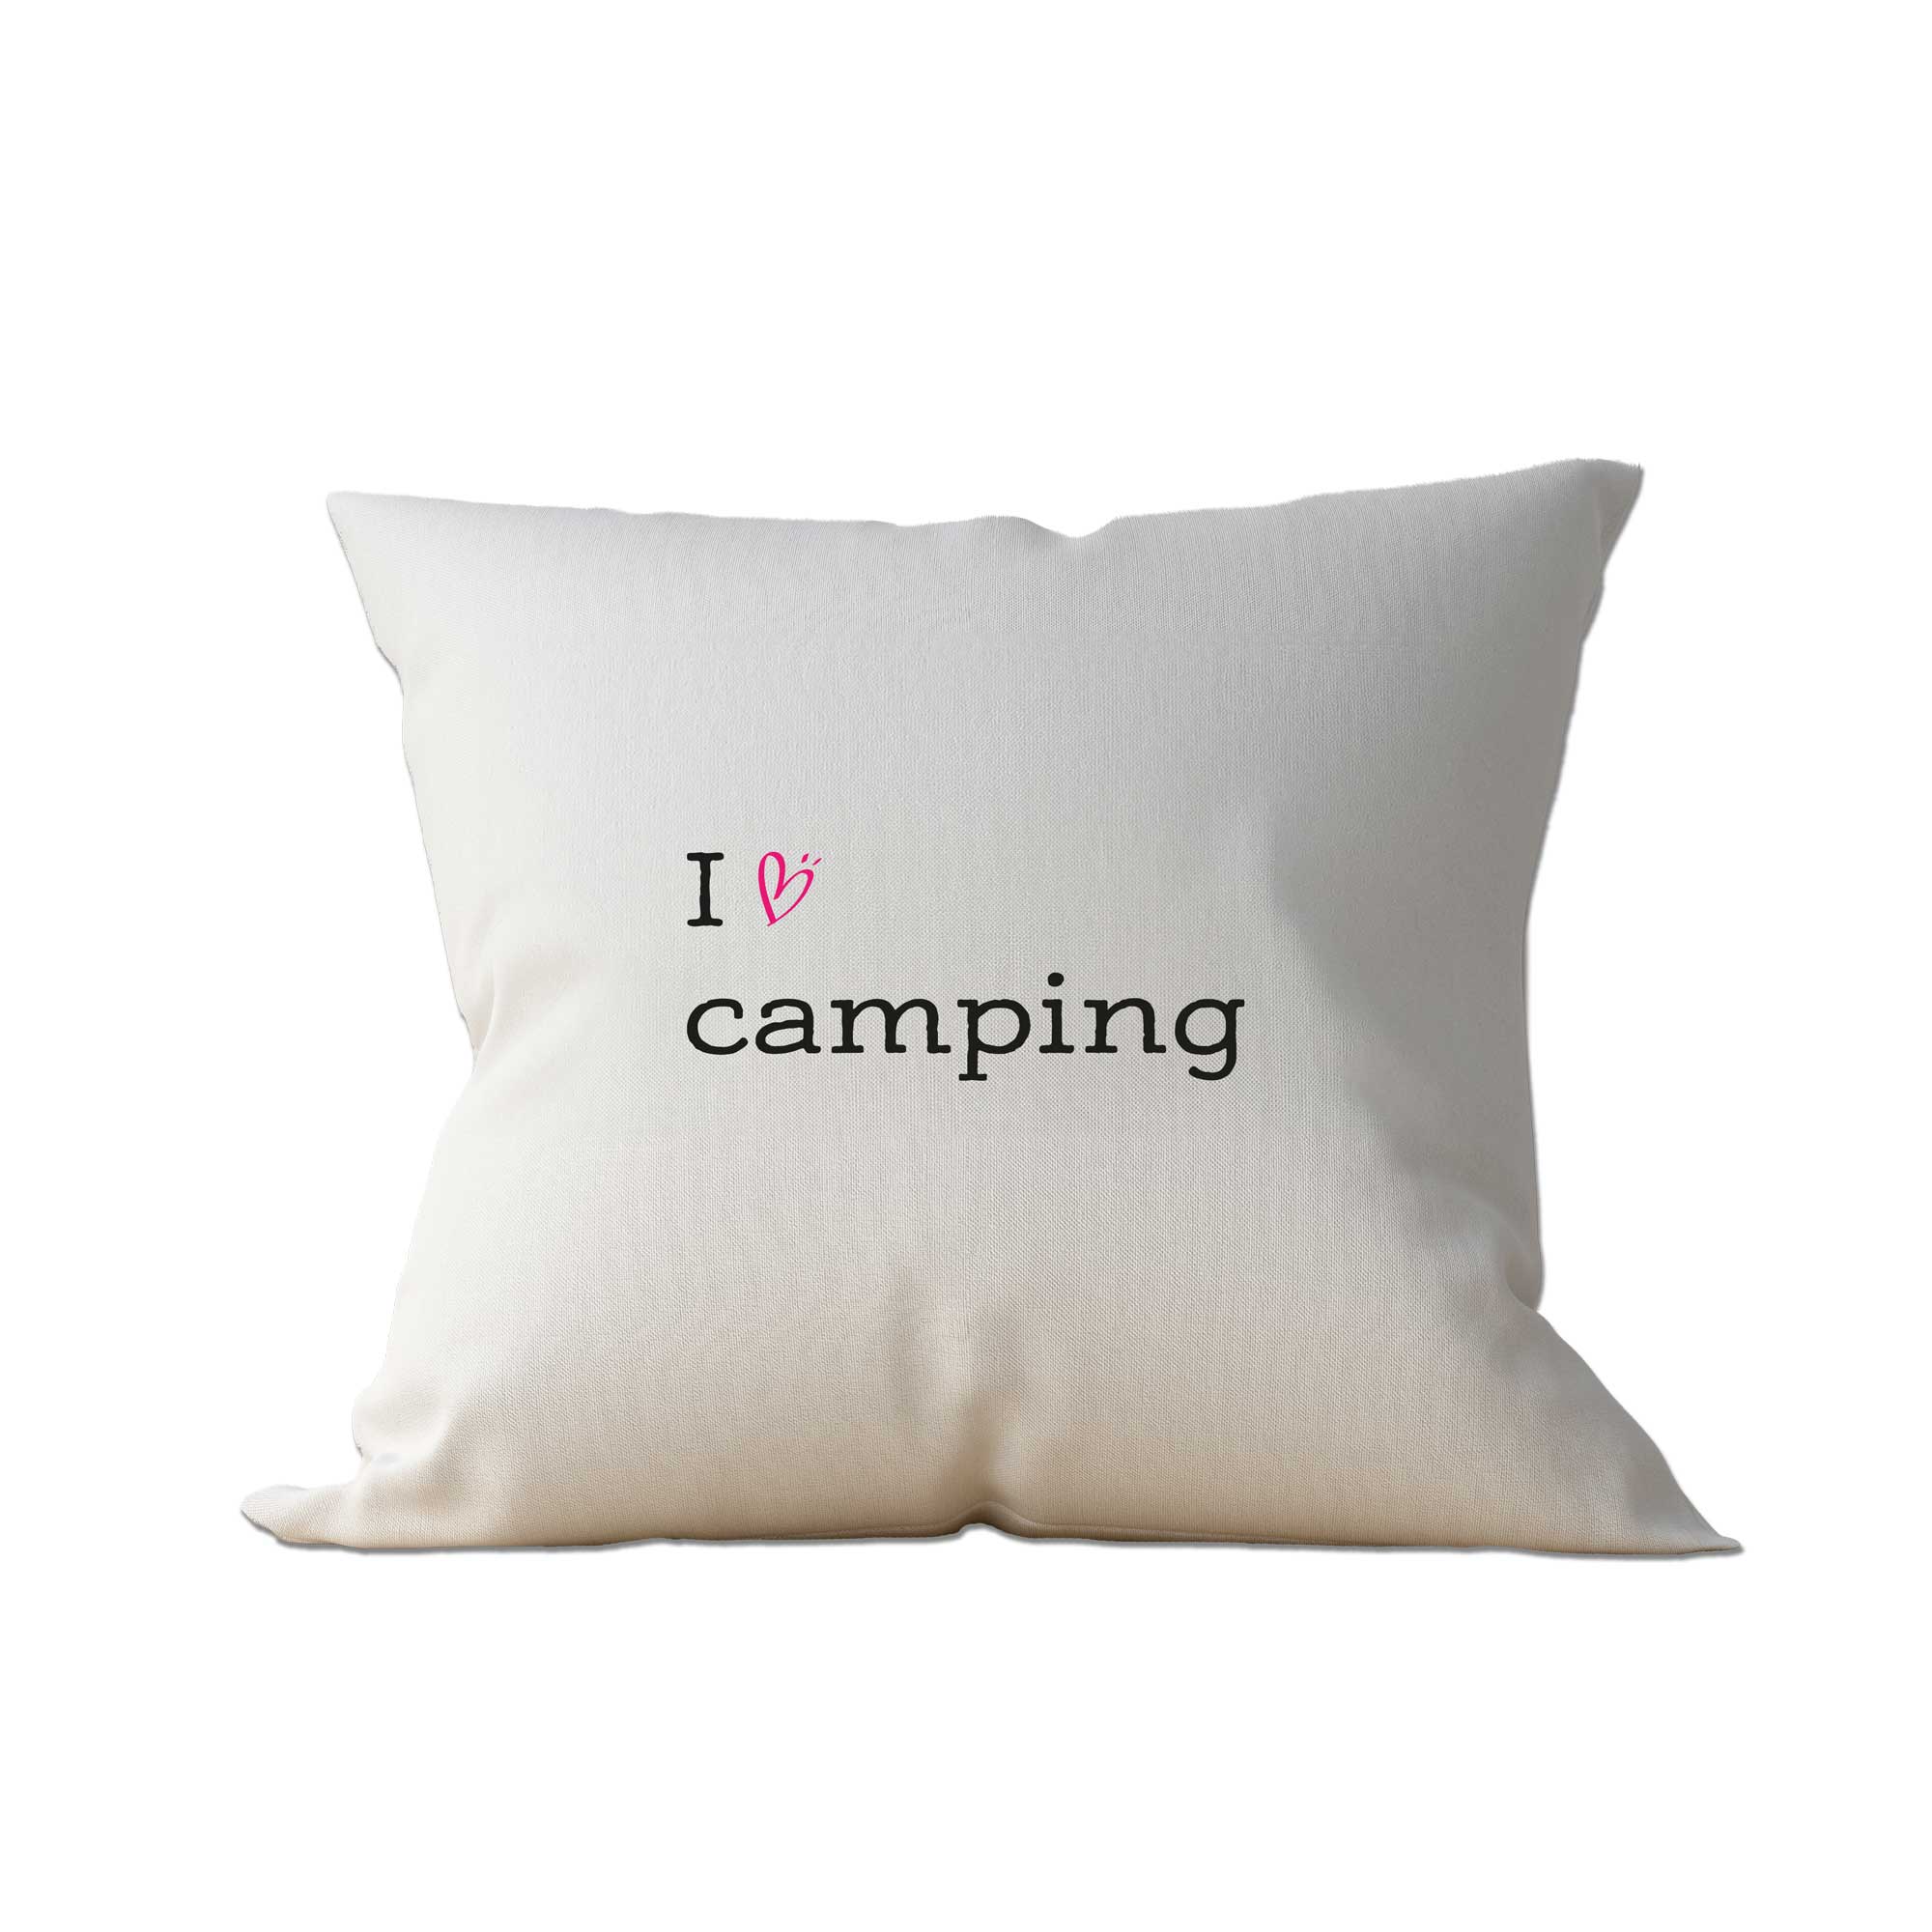 Camping pillow "I love camping"